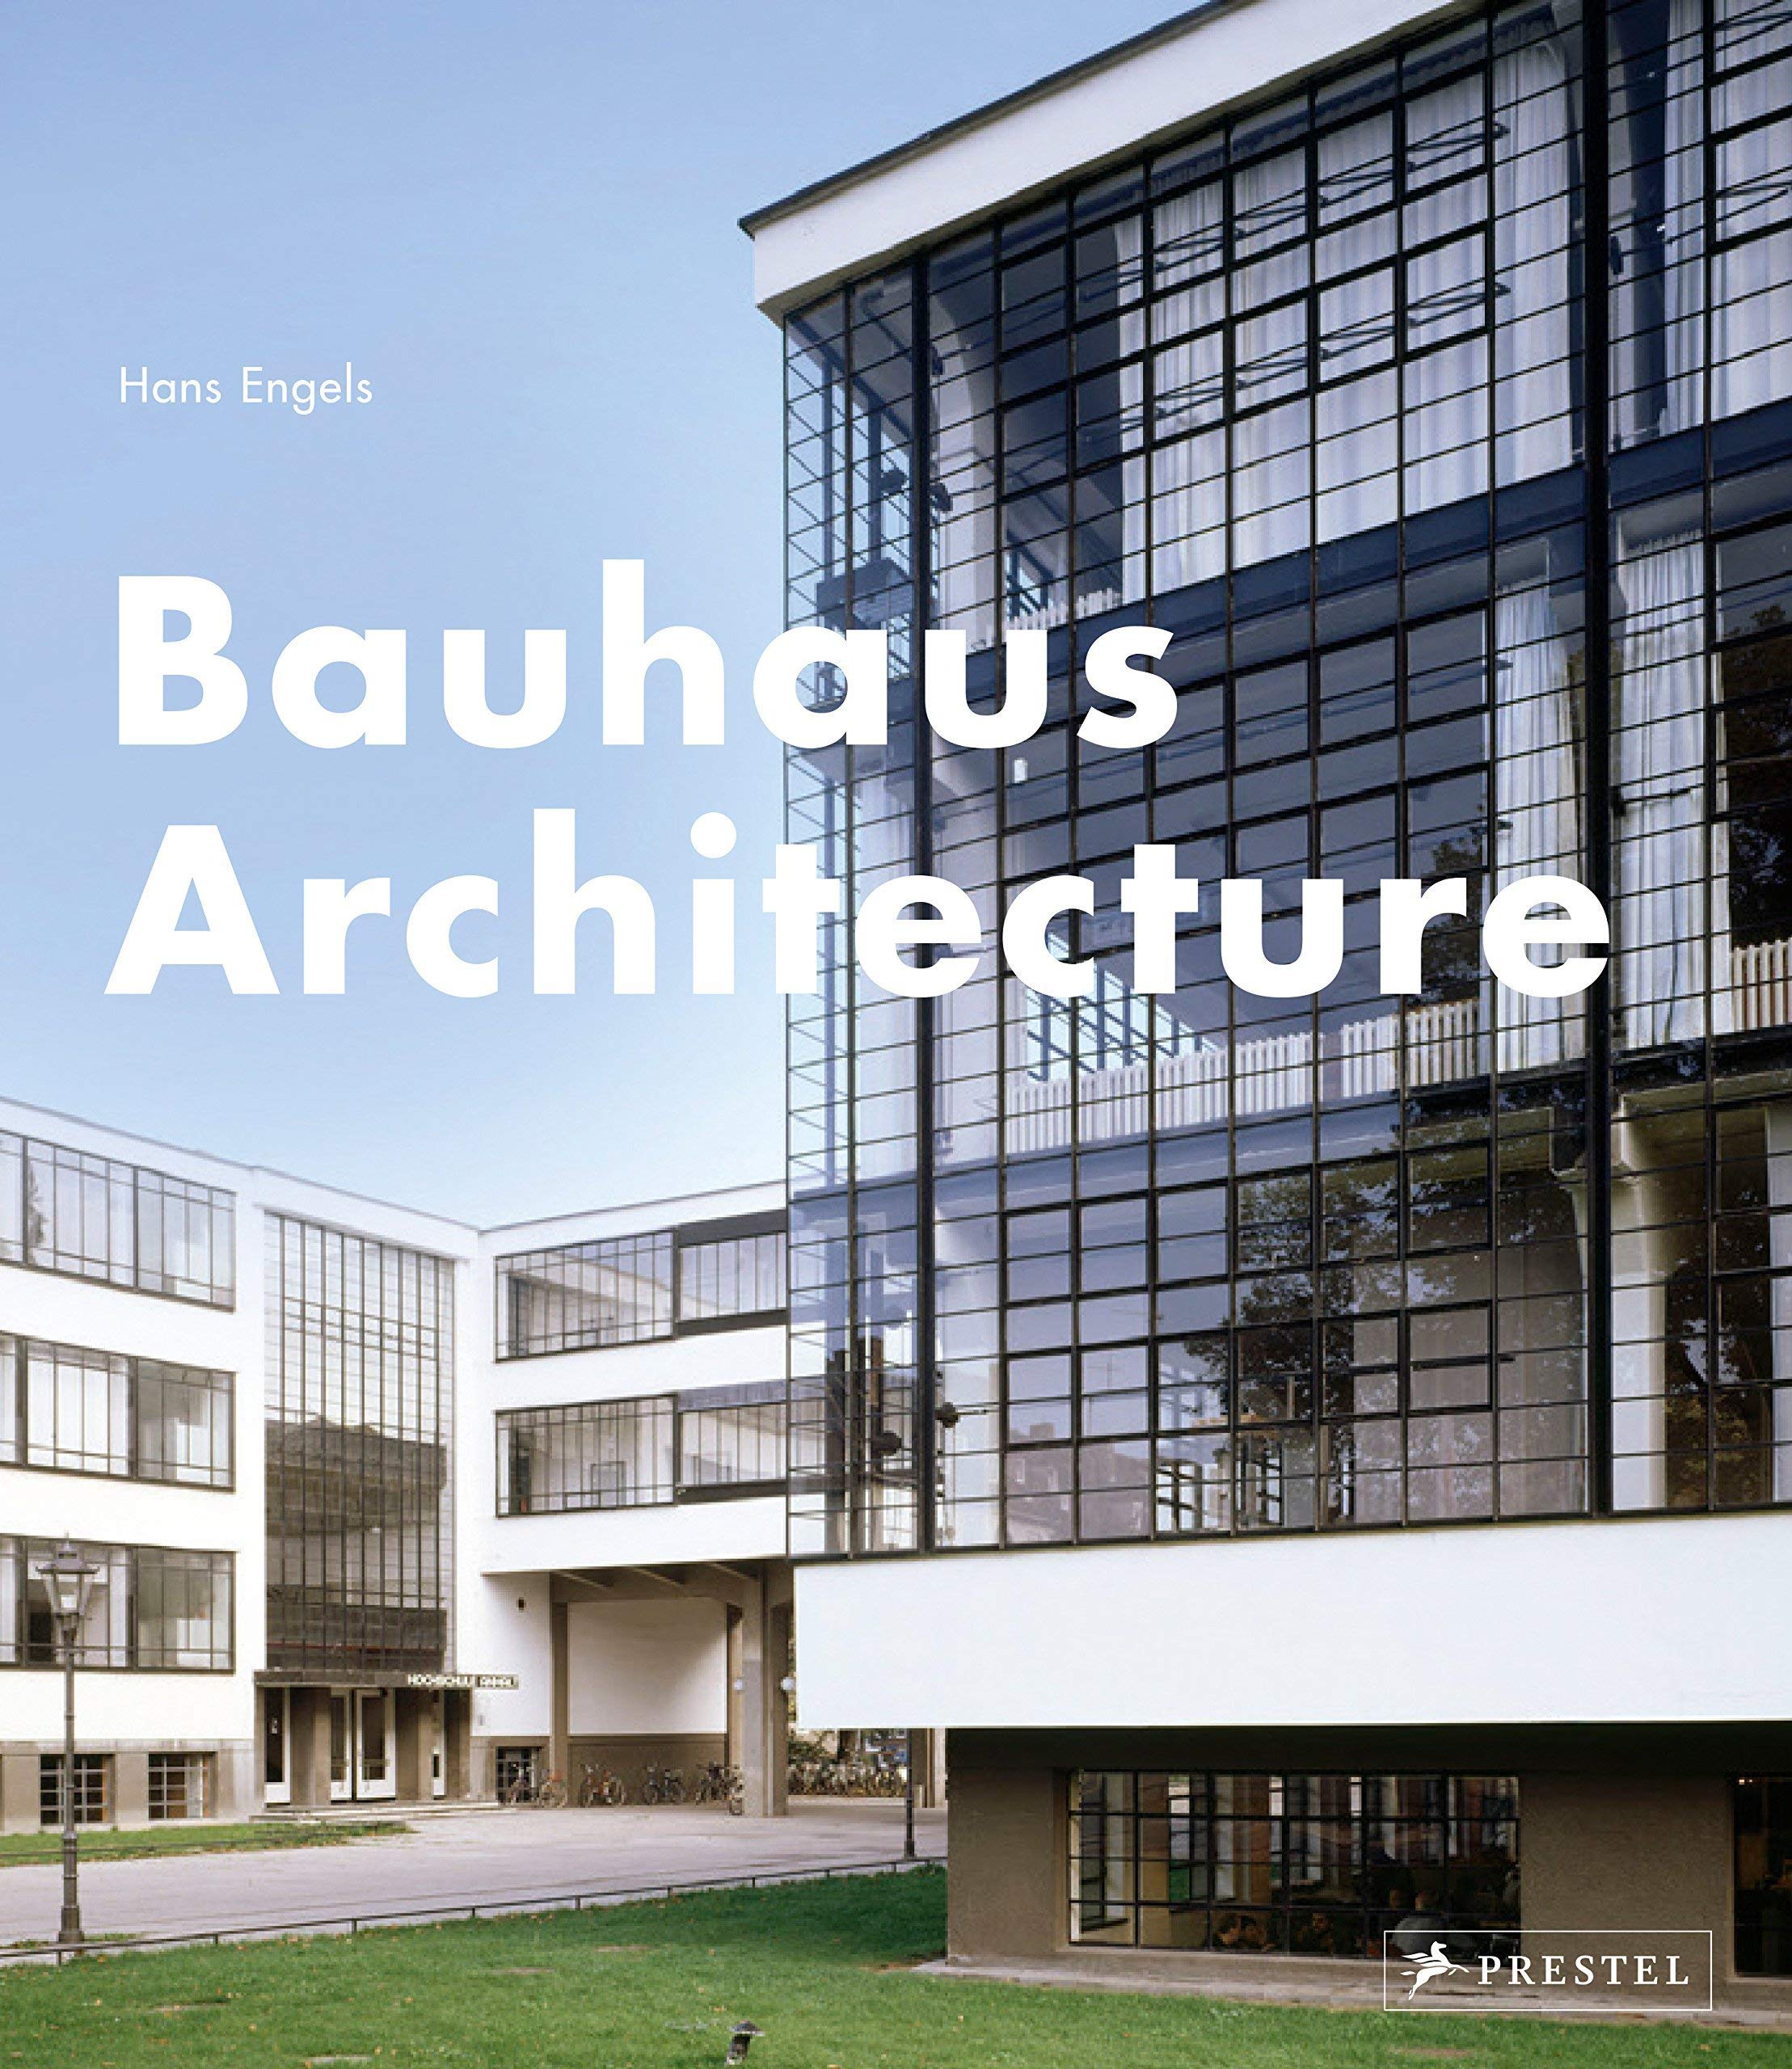 Bauhaus Architecture 1919 - 1933